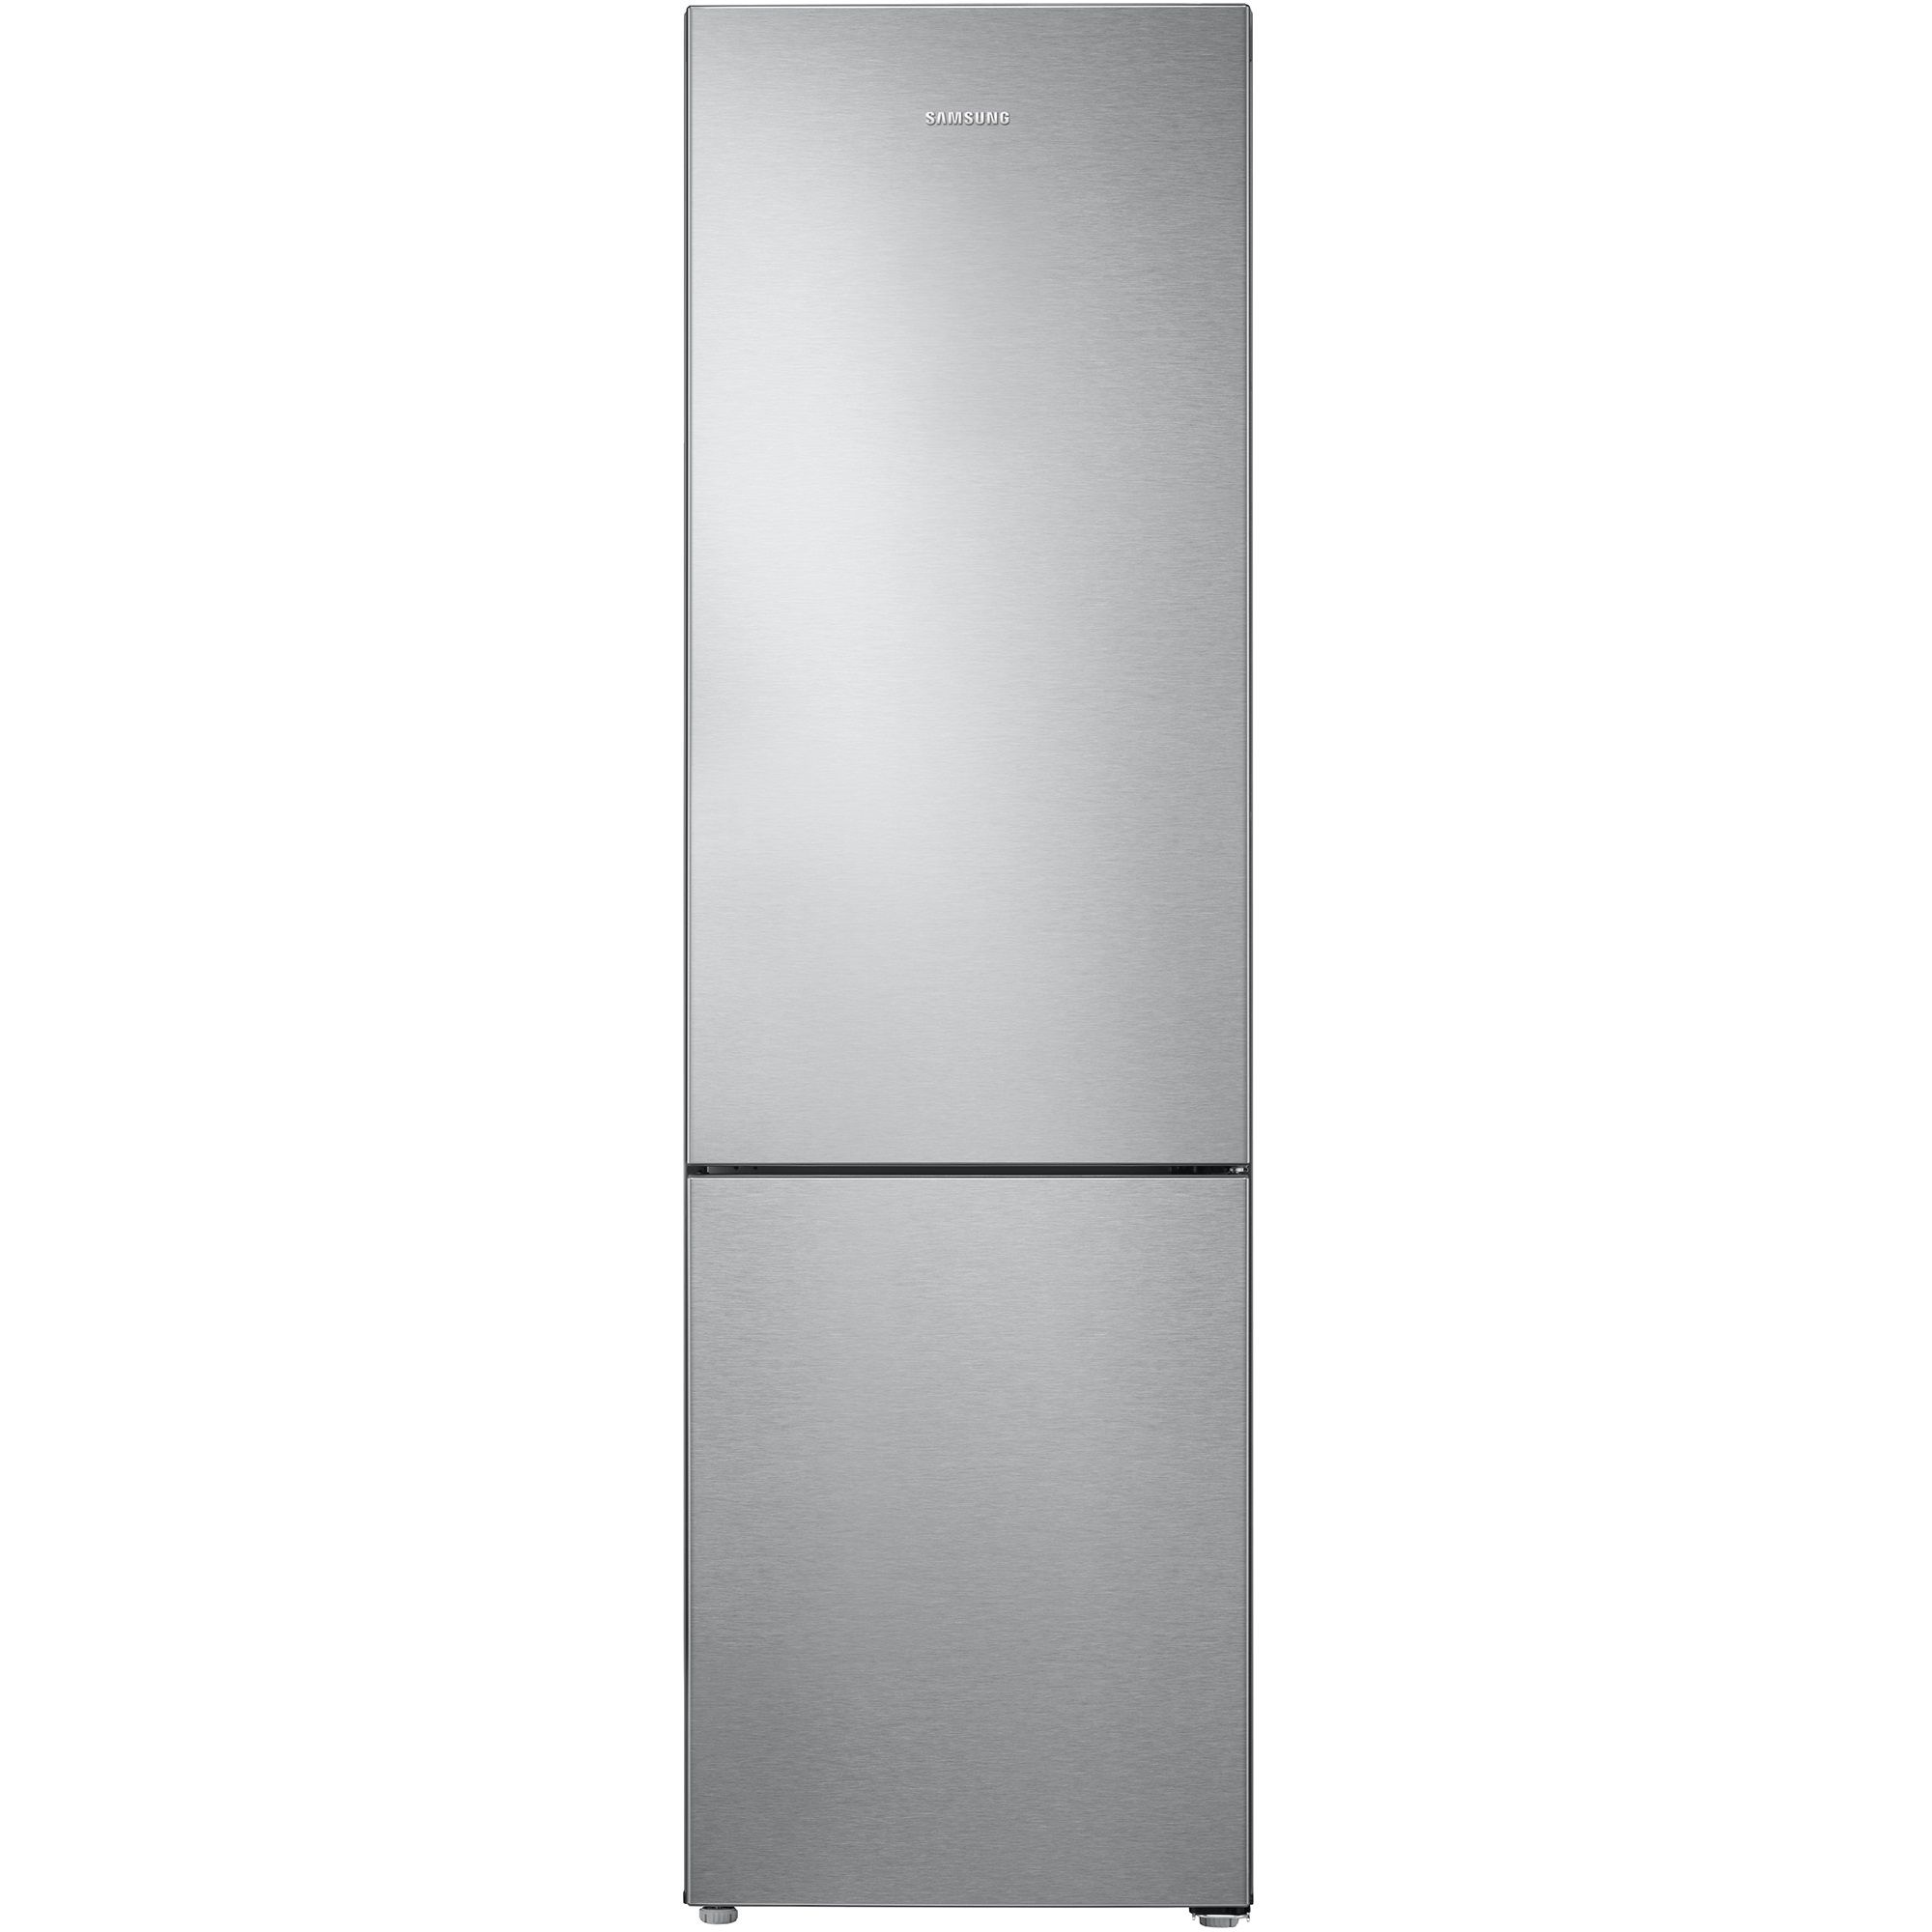 Combina frigorifica Samsung RB37J5010SA/EF, 367 l, Clasa A+, Inox